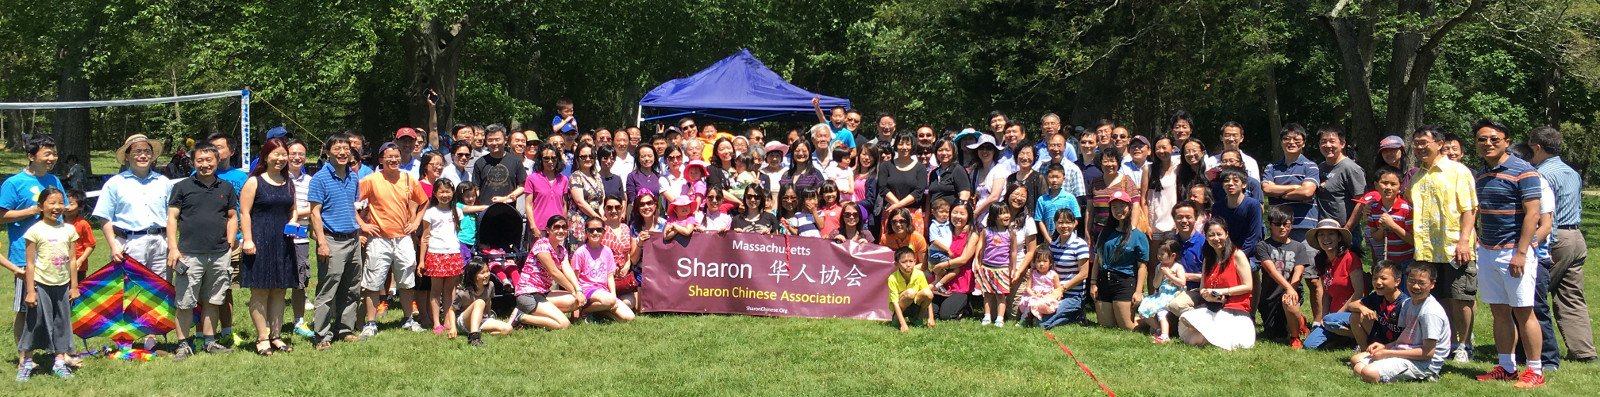 Sharon Chinese Association